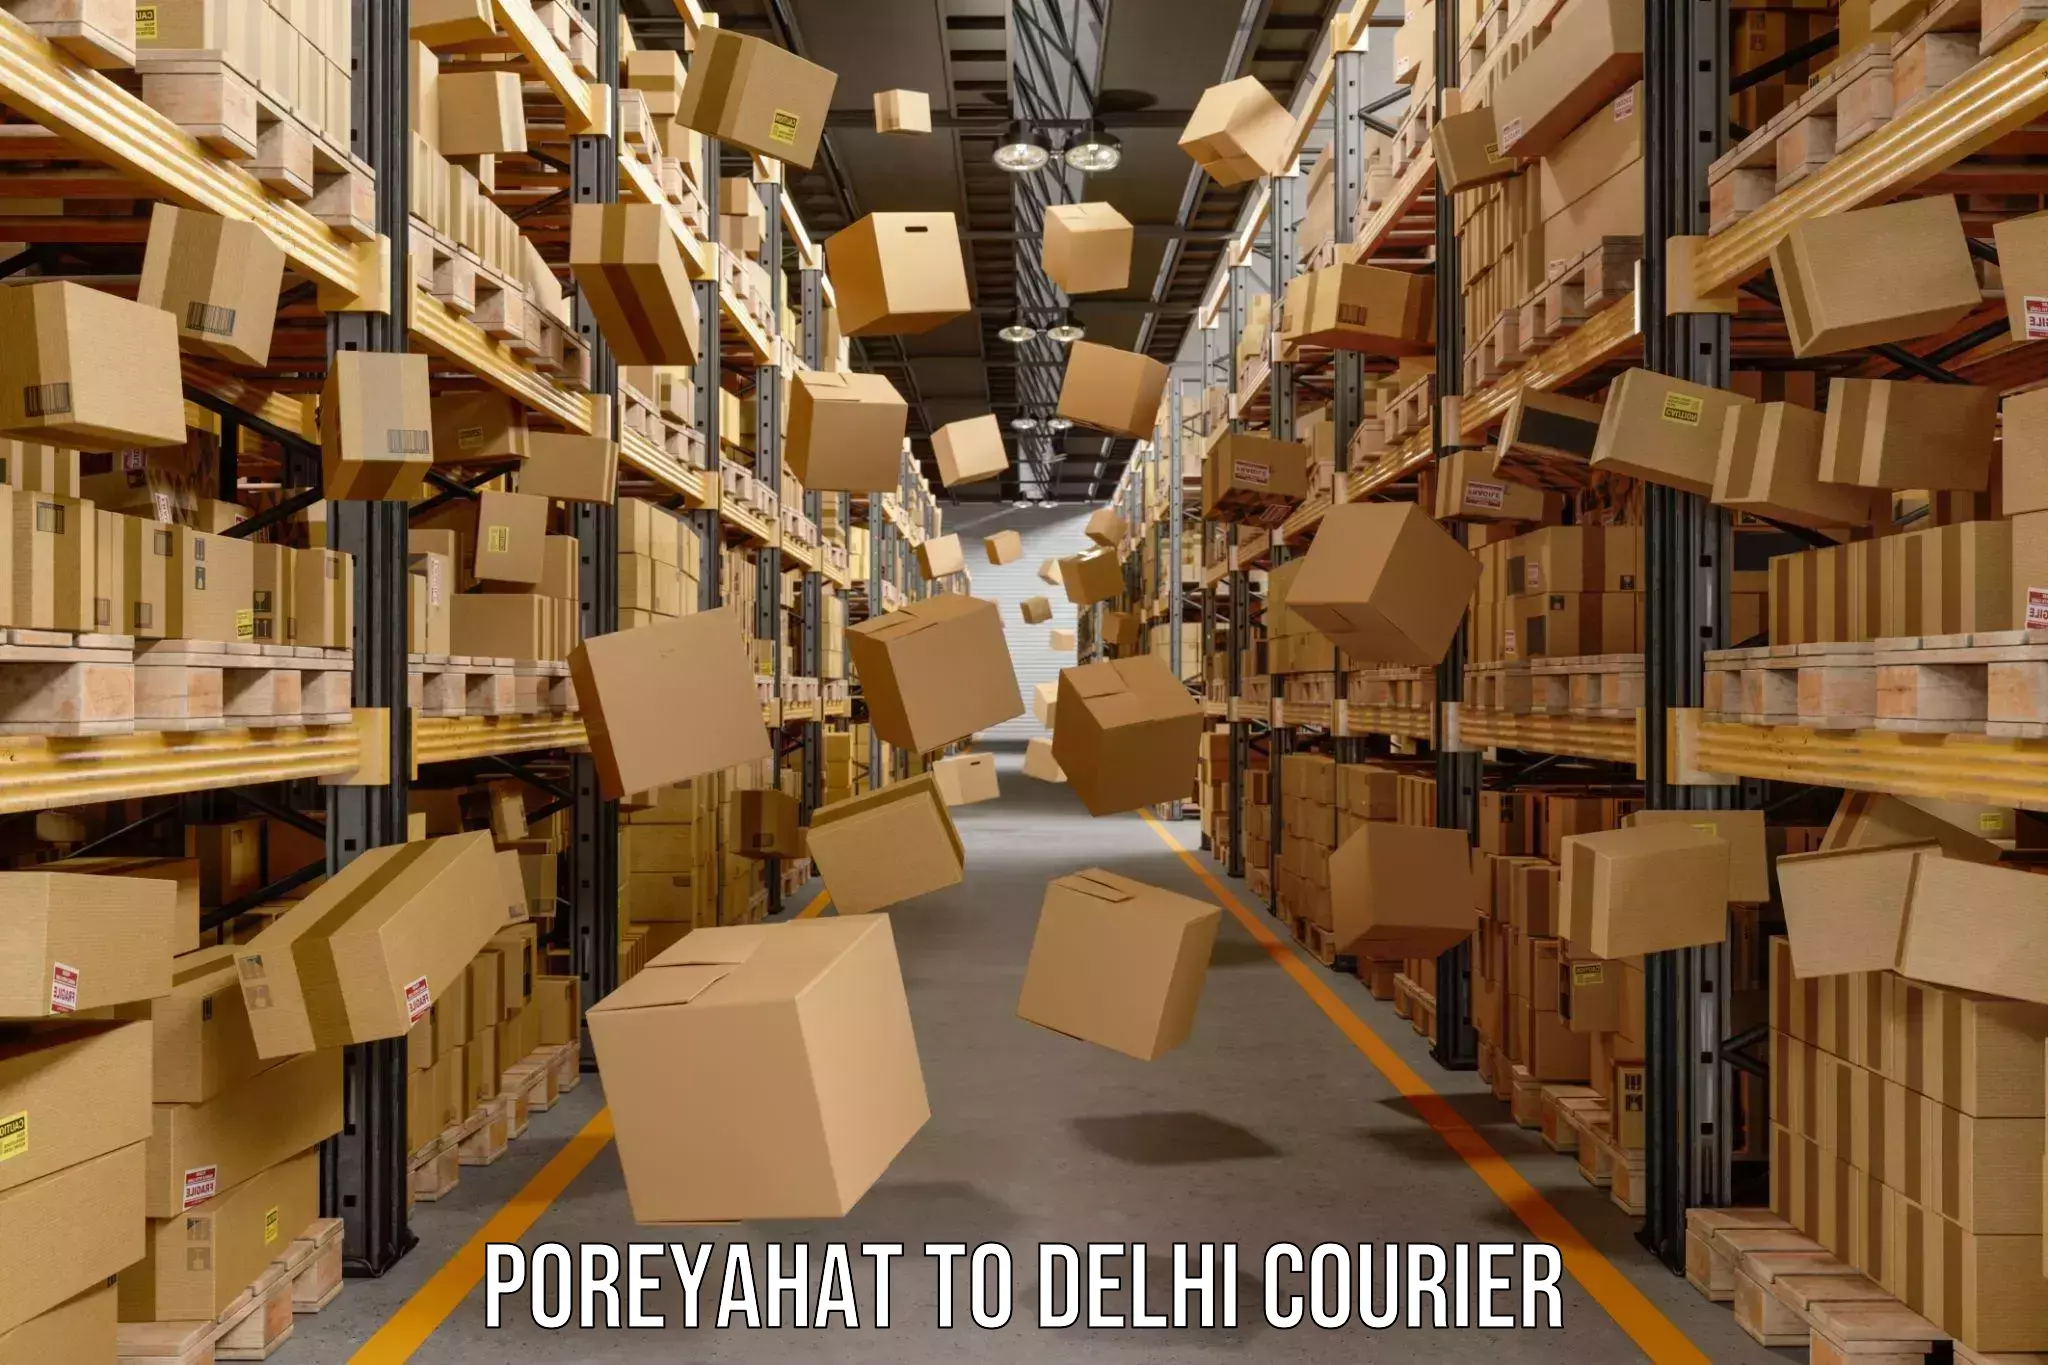 Doorstep delivery service Poreyahat to Delhi